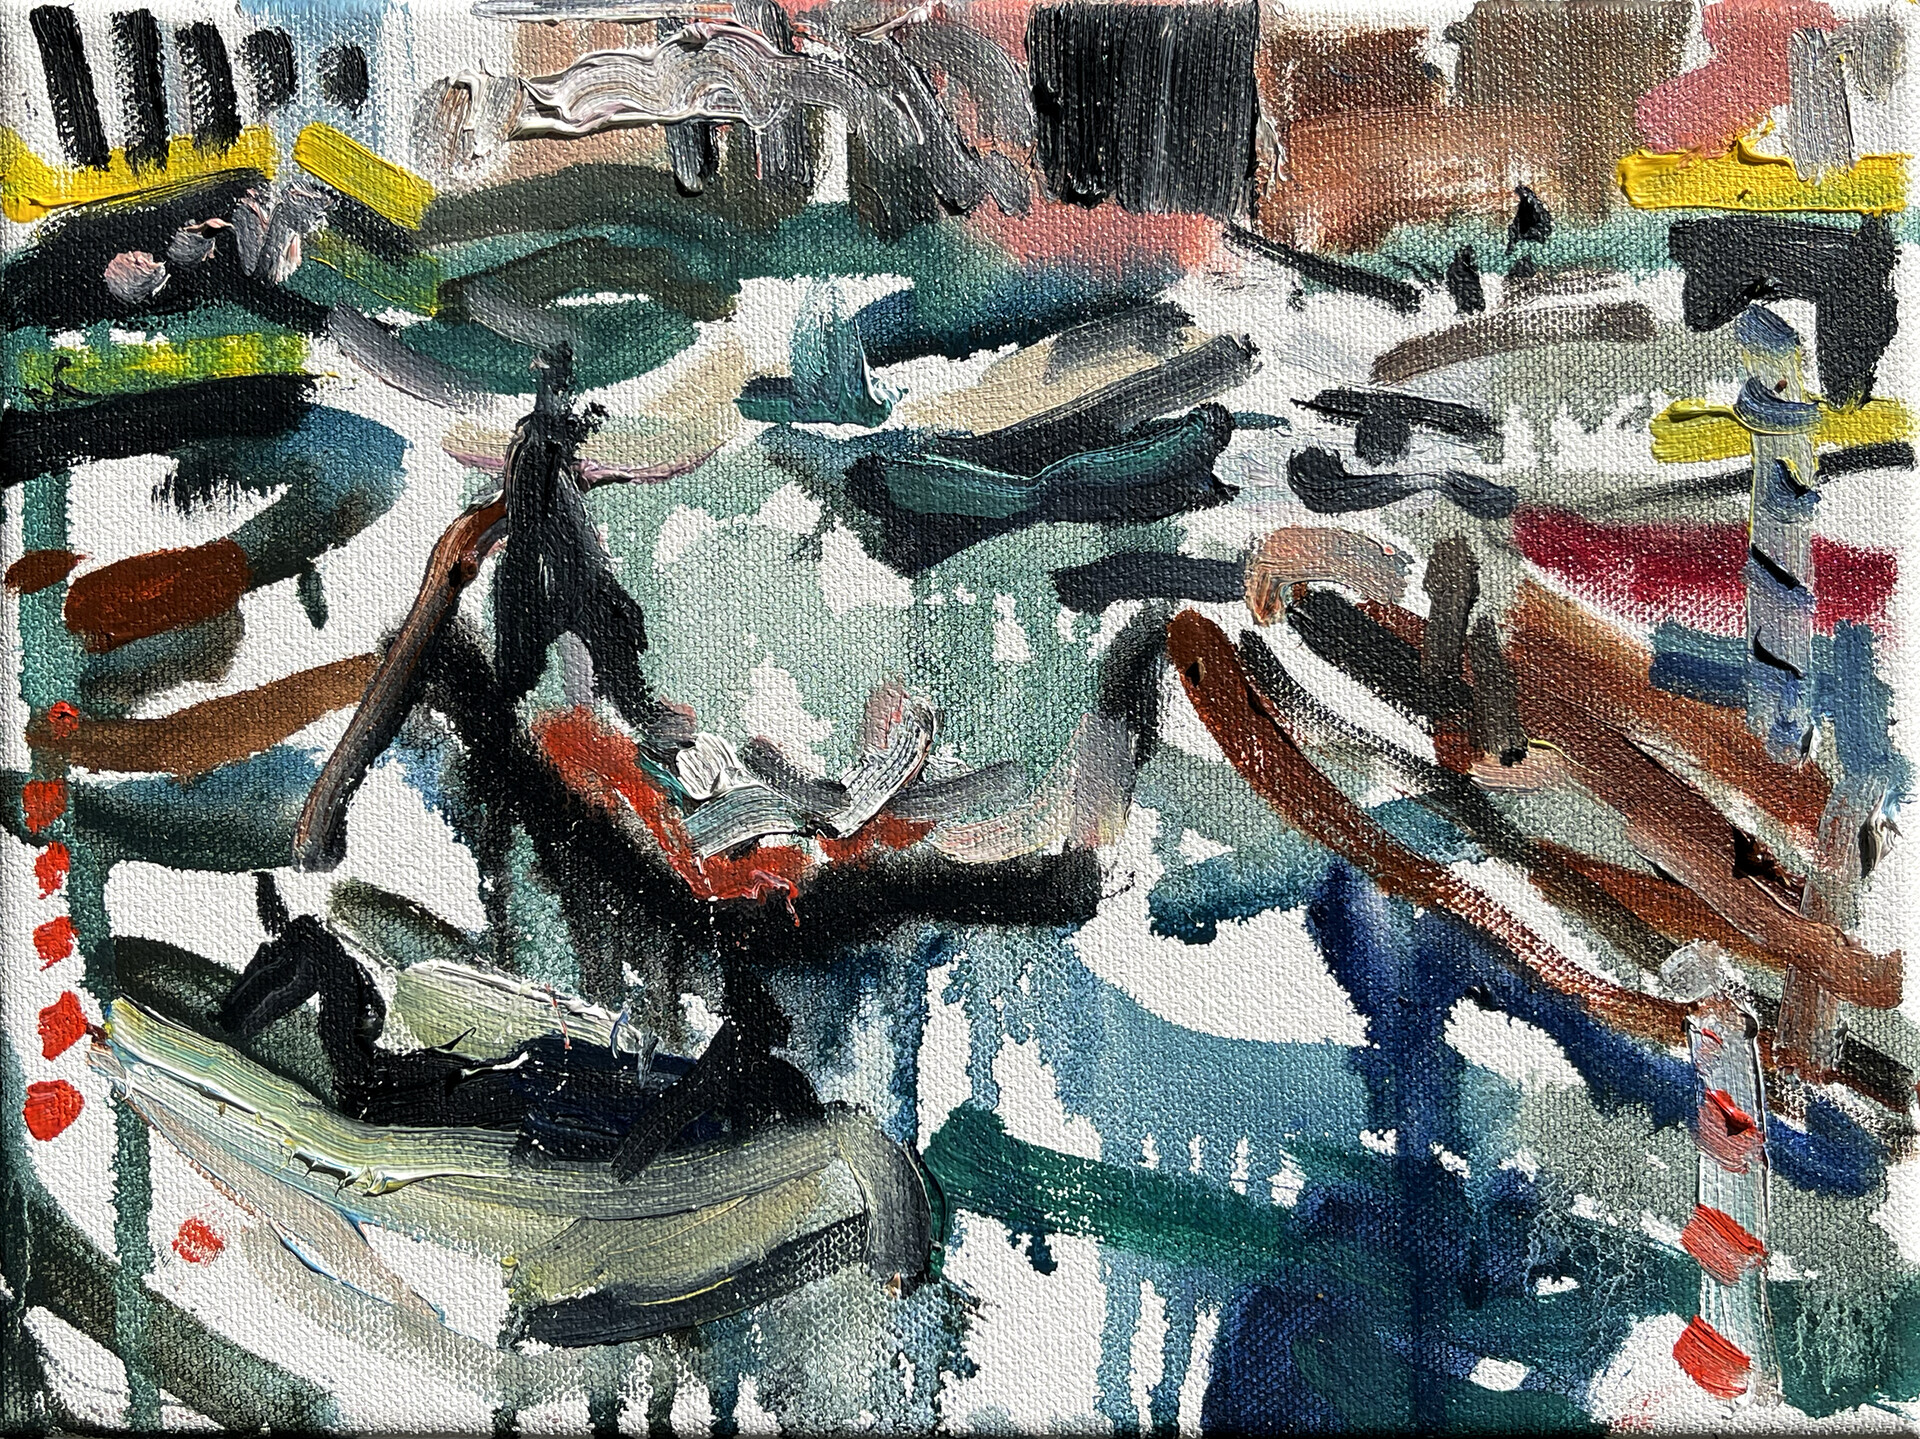 "Gondola", oil on canvas, 24 x 18 cm, 2022